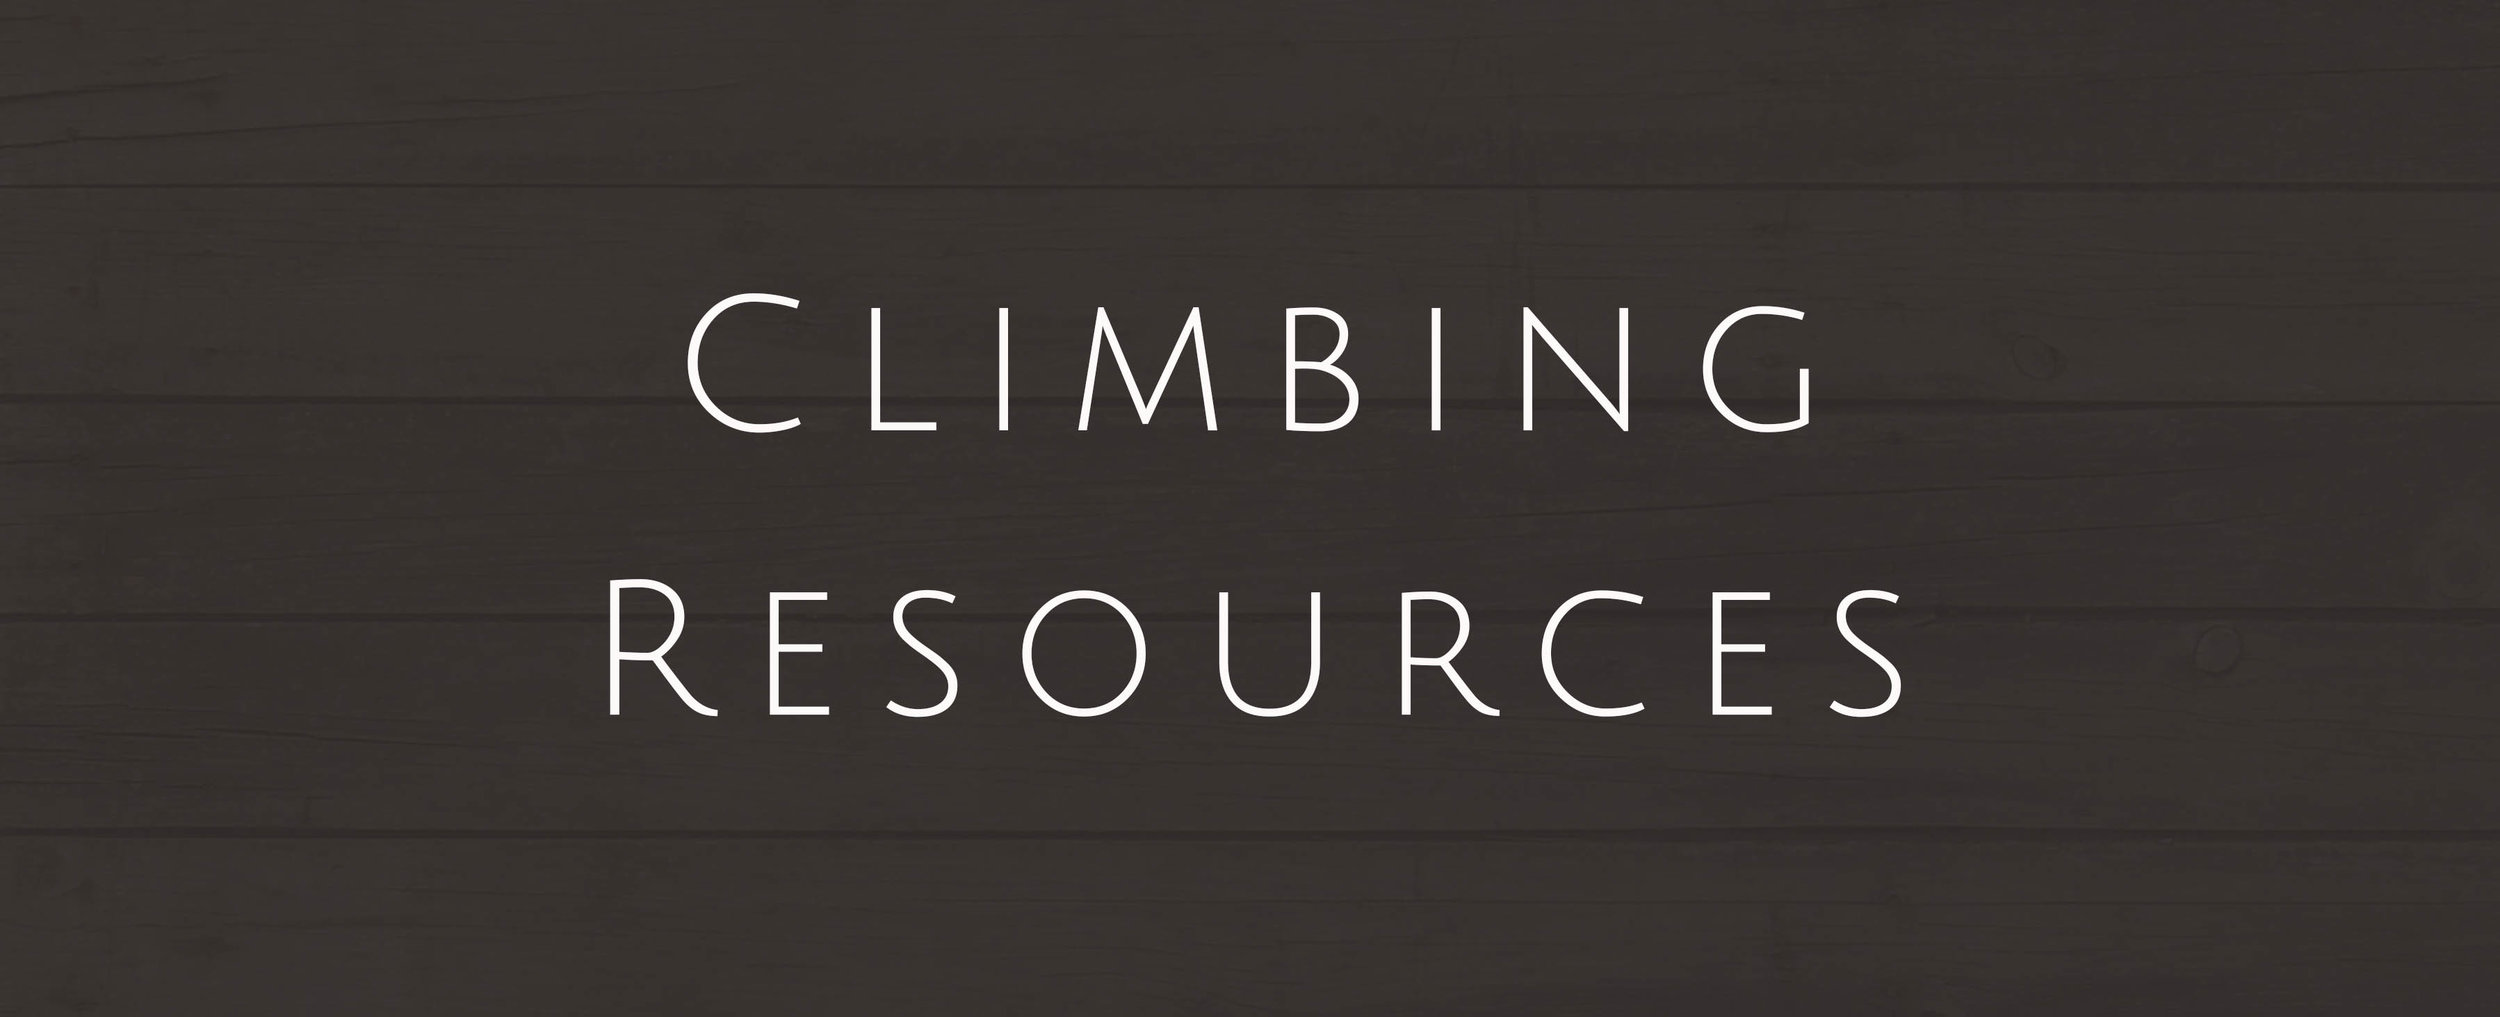 All - Climbing Resources.jpg